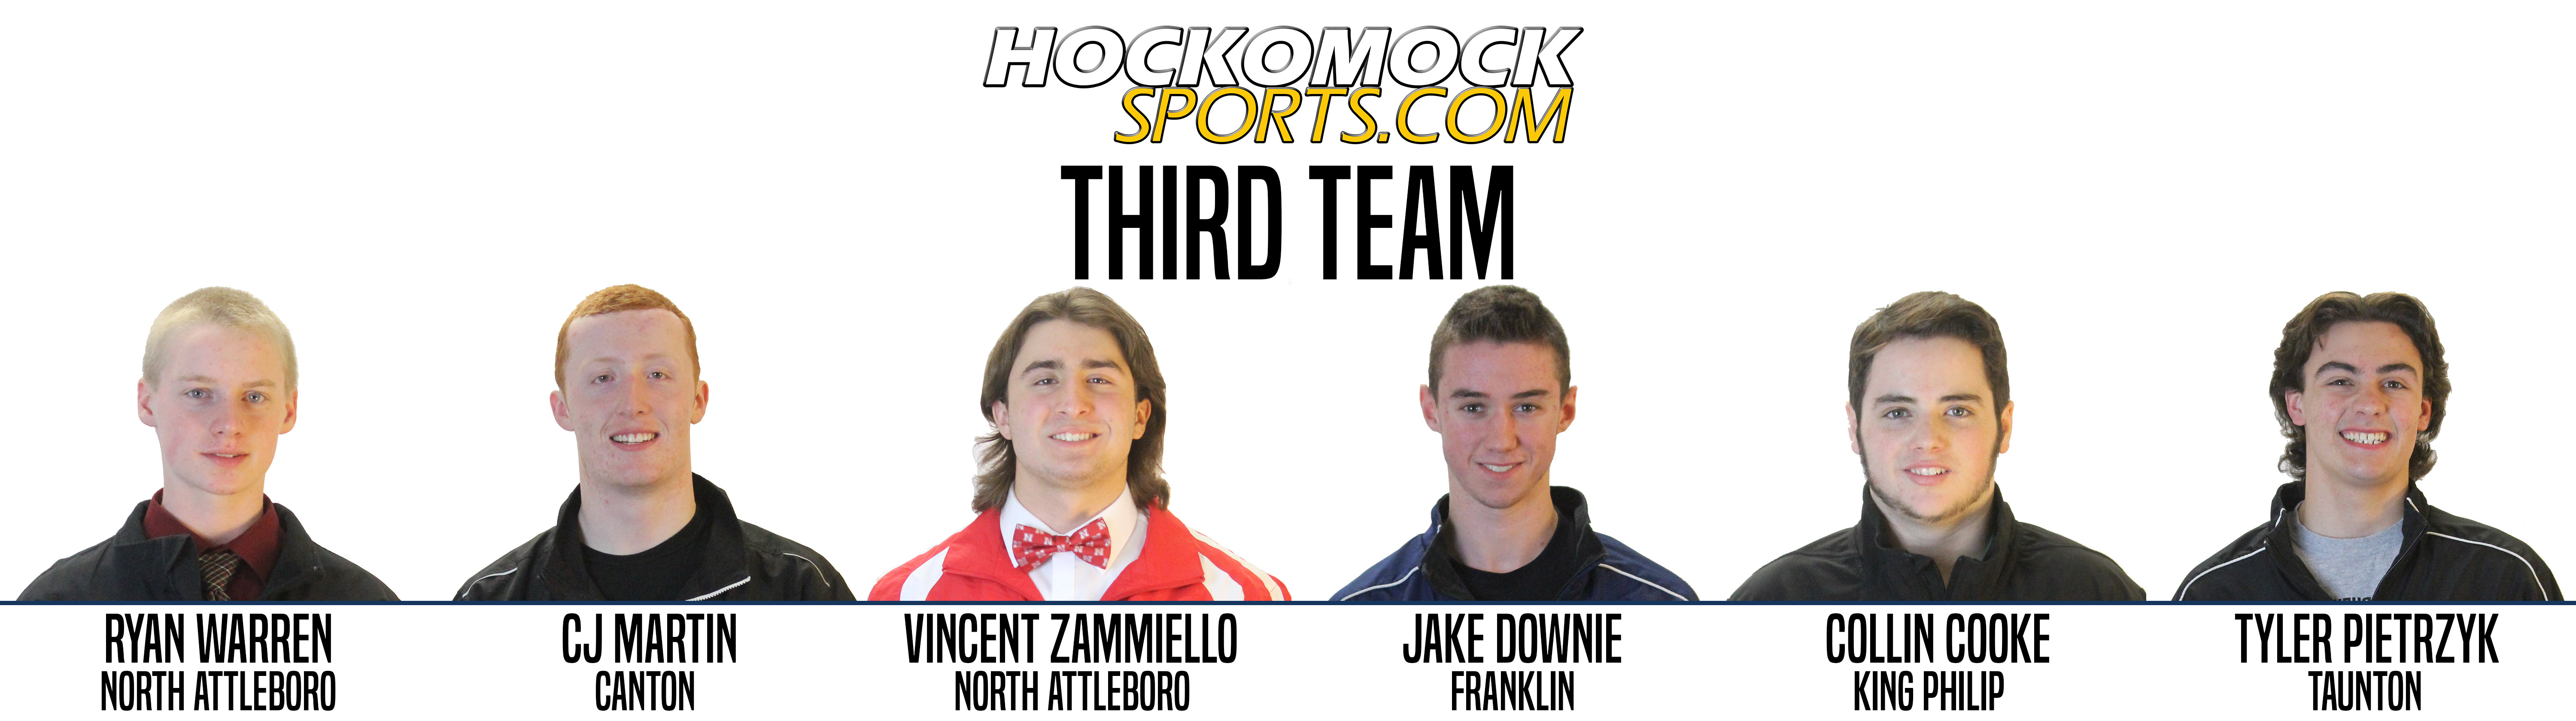 3rd Team Hockey - Hockomock Sports photo